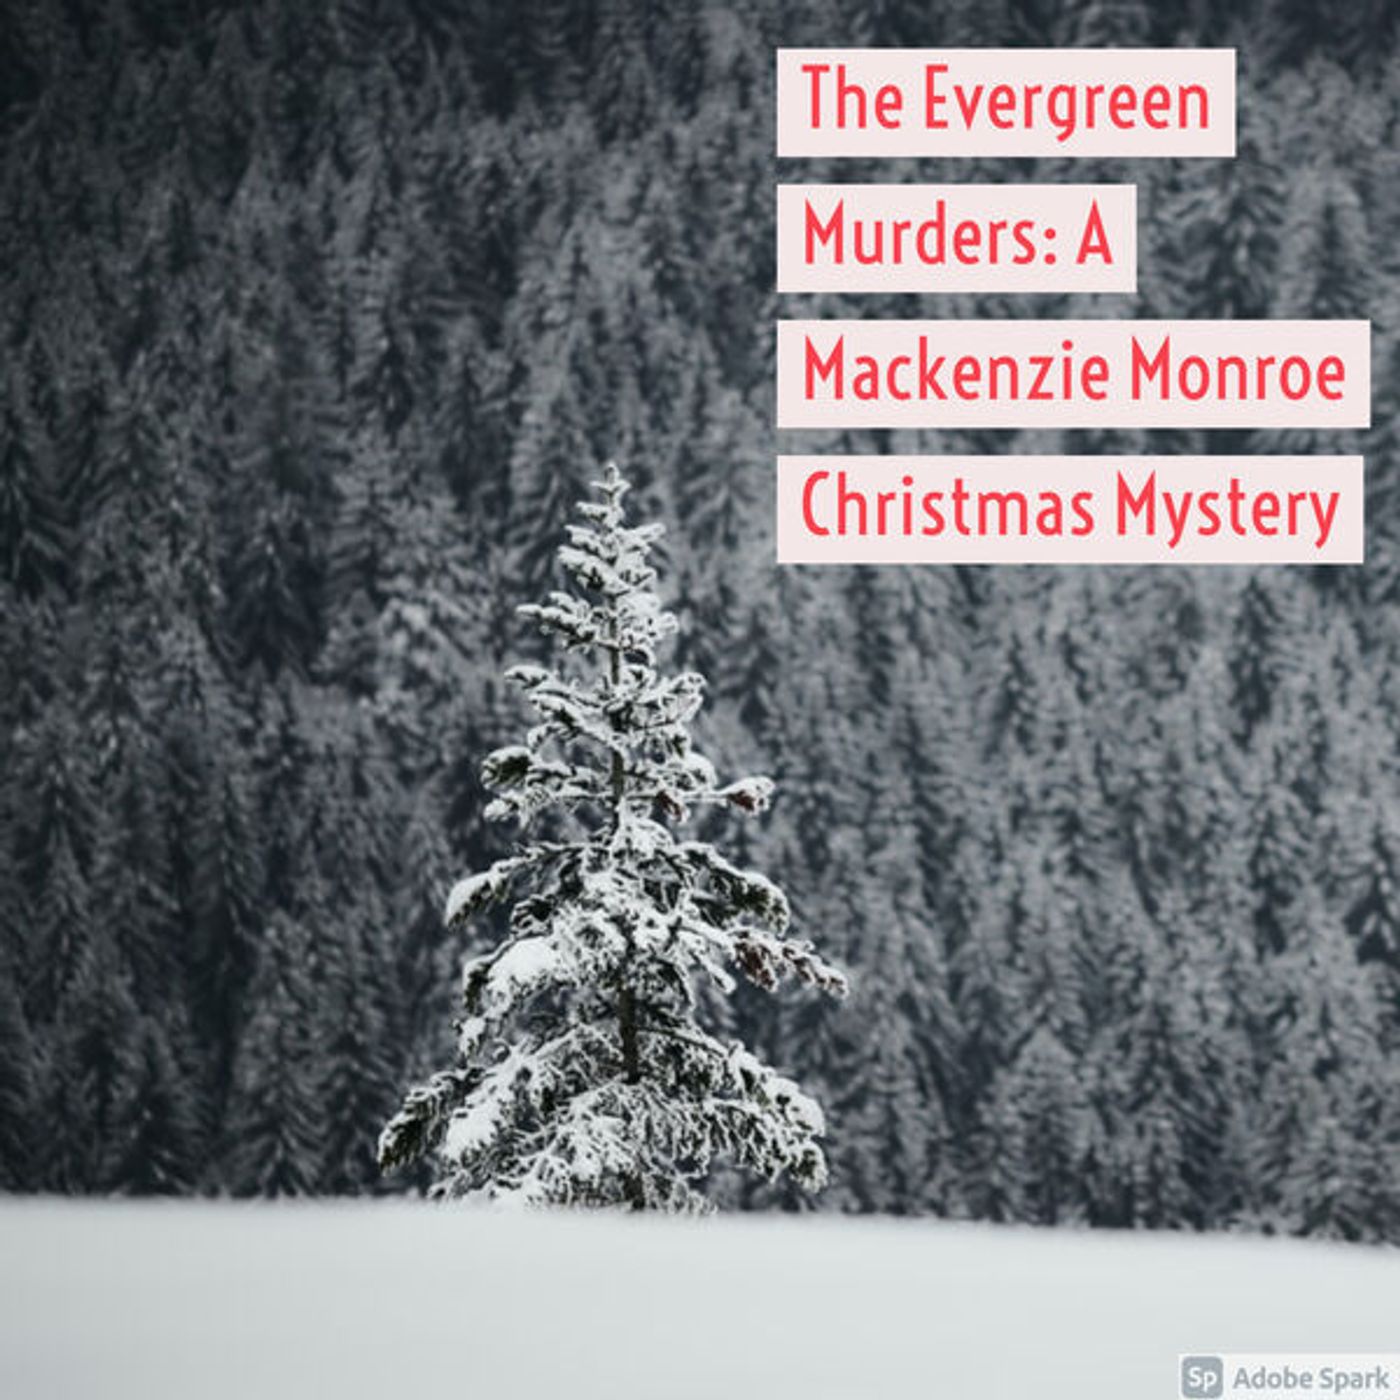 Holiday Podcast: The Evergreen Murders: A Mackenzie Monroe Christmas Mystery